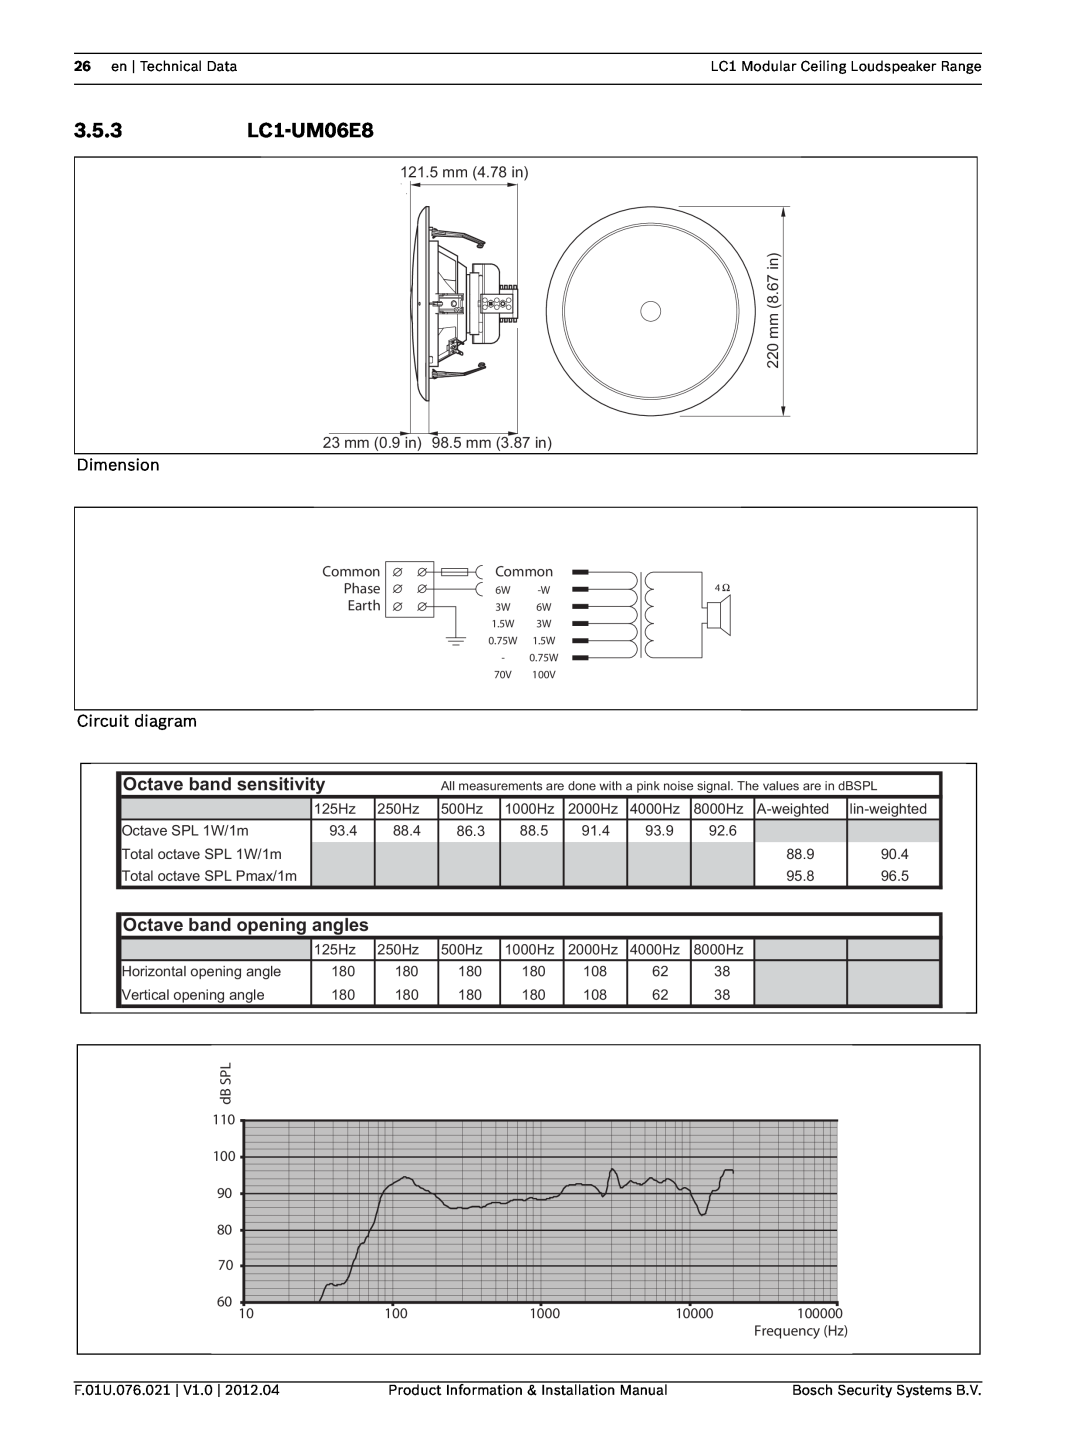 Bosch Appliances 3.5.3LC1-UM06E8, Octave band sensitivity, Octave band opening angles, dB SPL 110 100 90, Bosch, 1000 